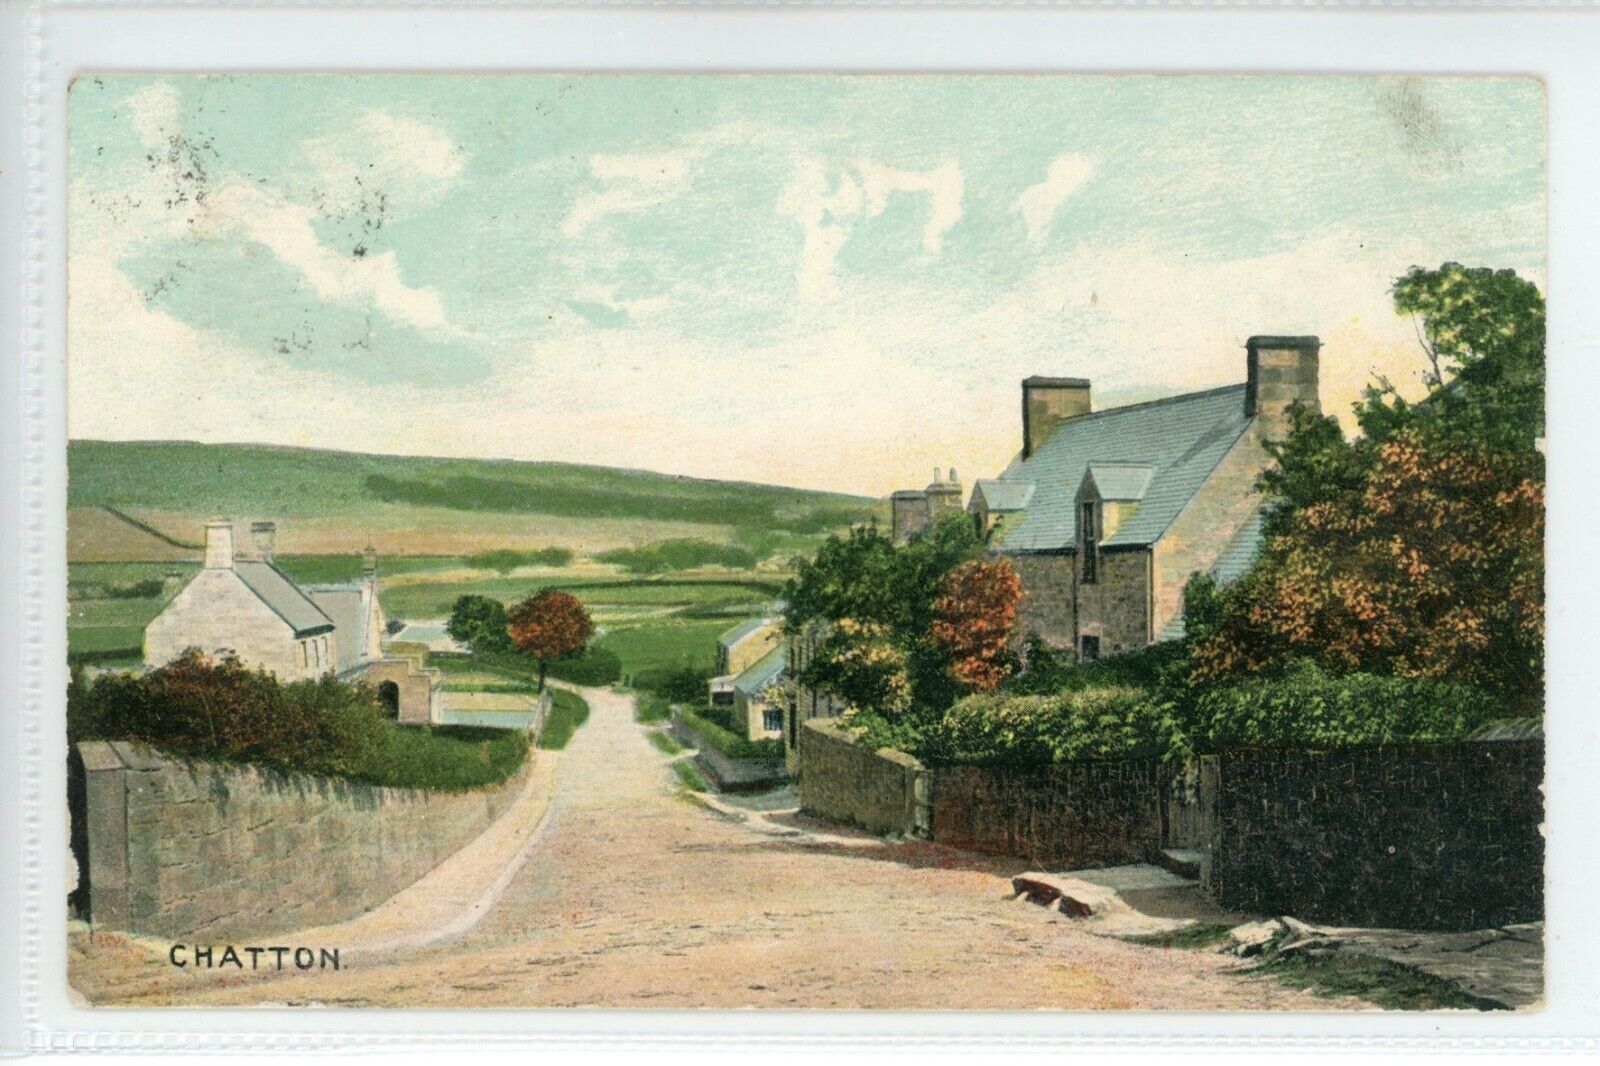 House Clearance - Chatton, village view pu 1905 Wooler 63 vertical numeral duplex postmark